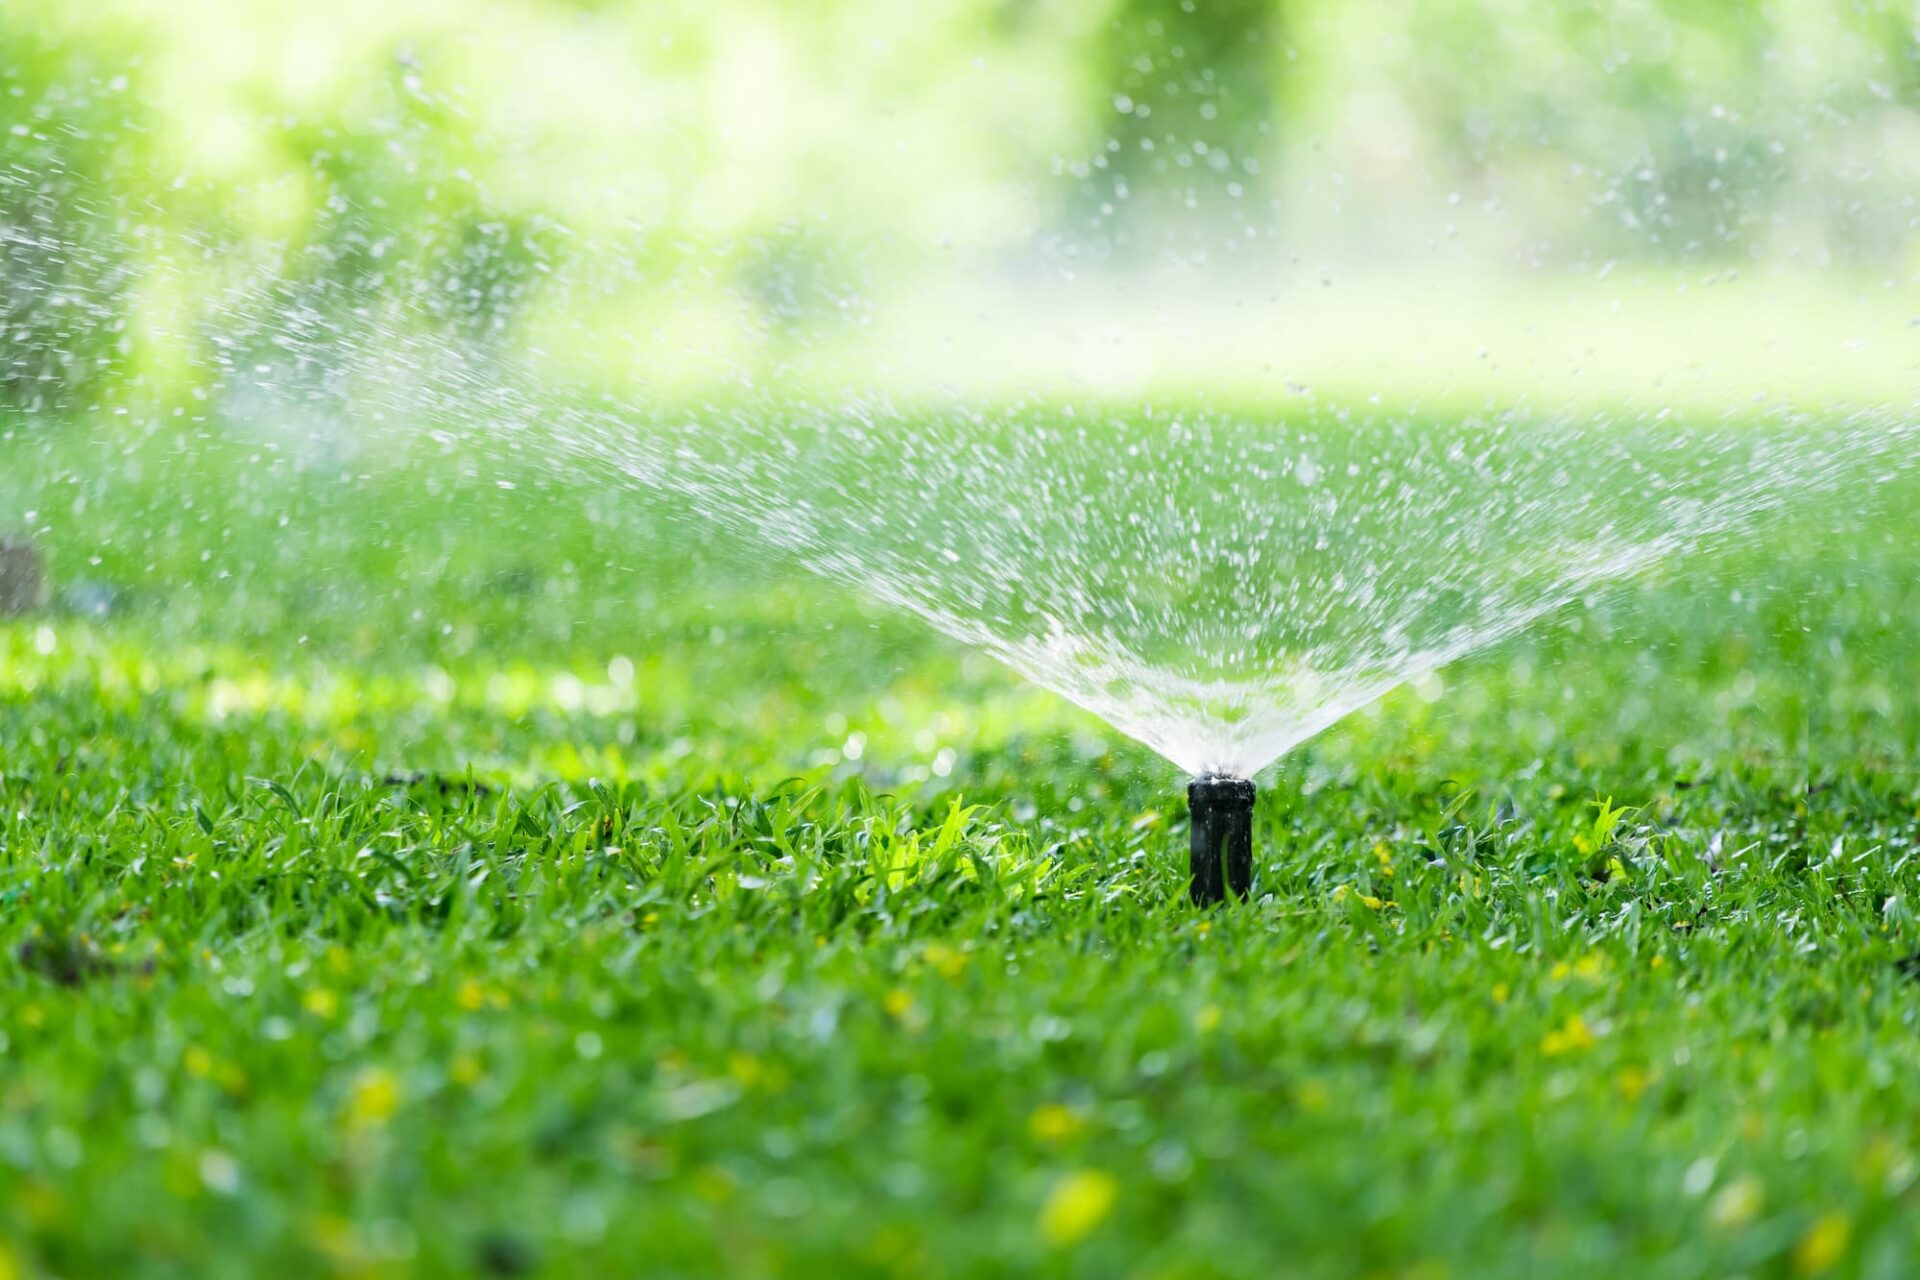 Greenway Irrigation Sprinkler On Lawn Rotating